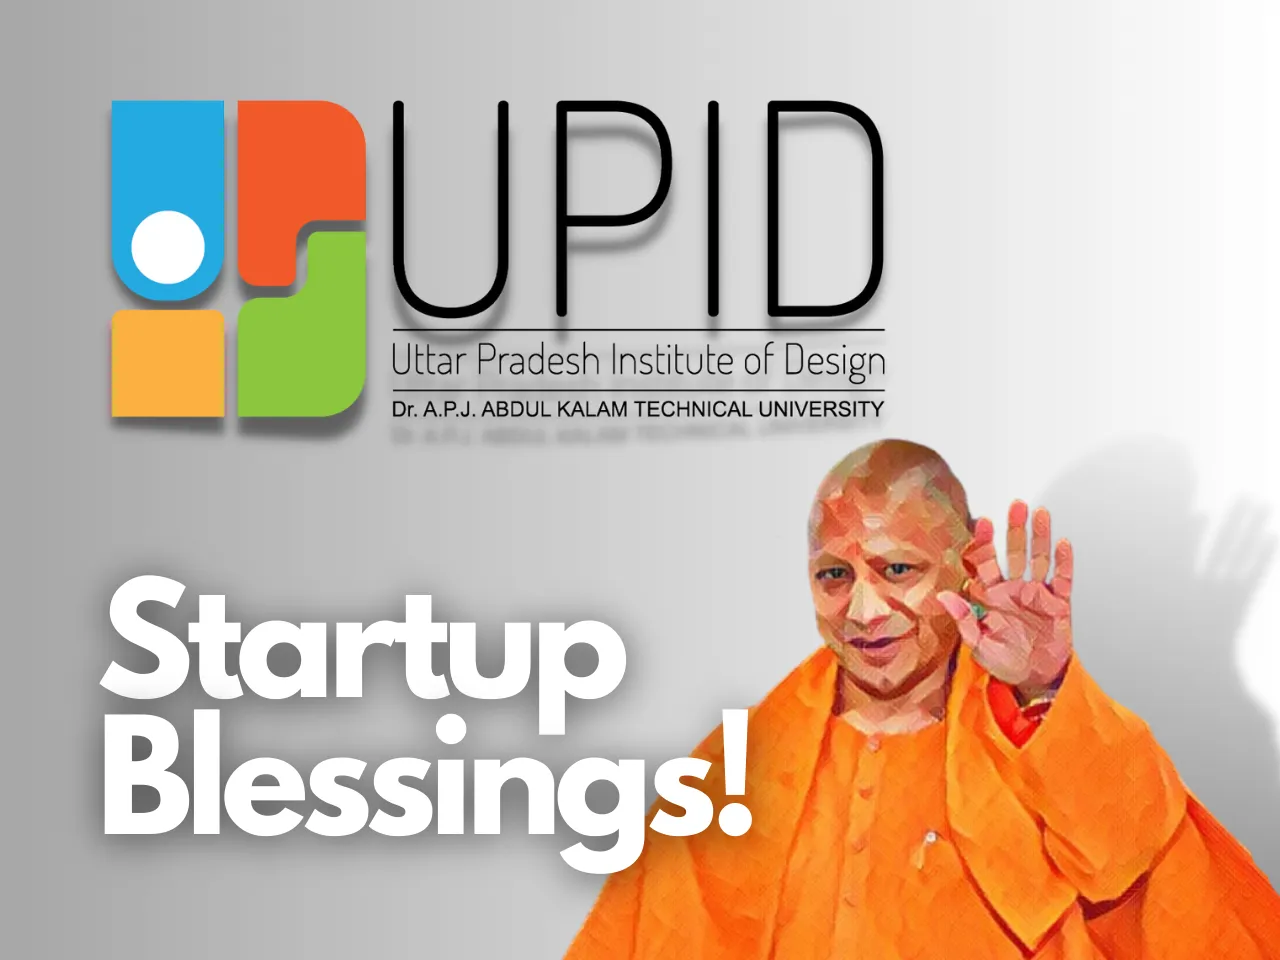 Uttar Pradesh Institute of Design's New Incubation Centre to Empower